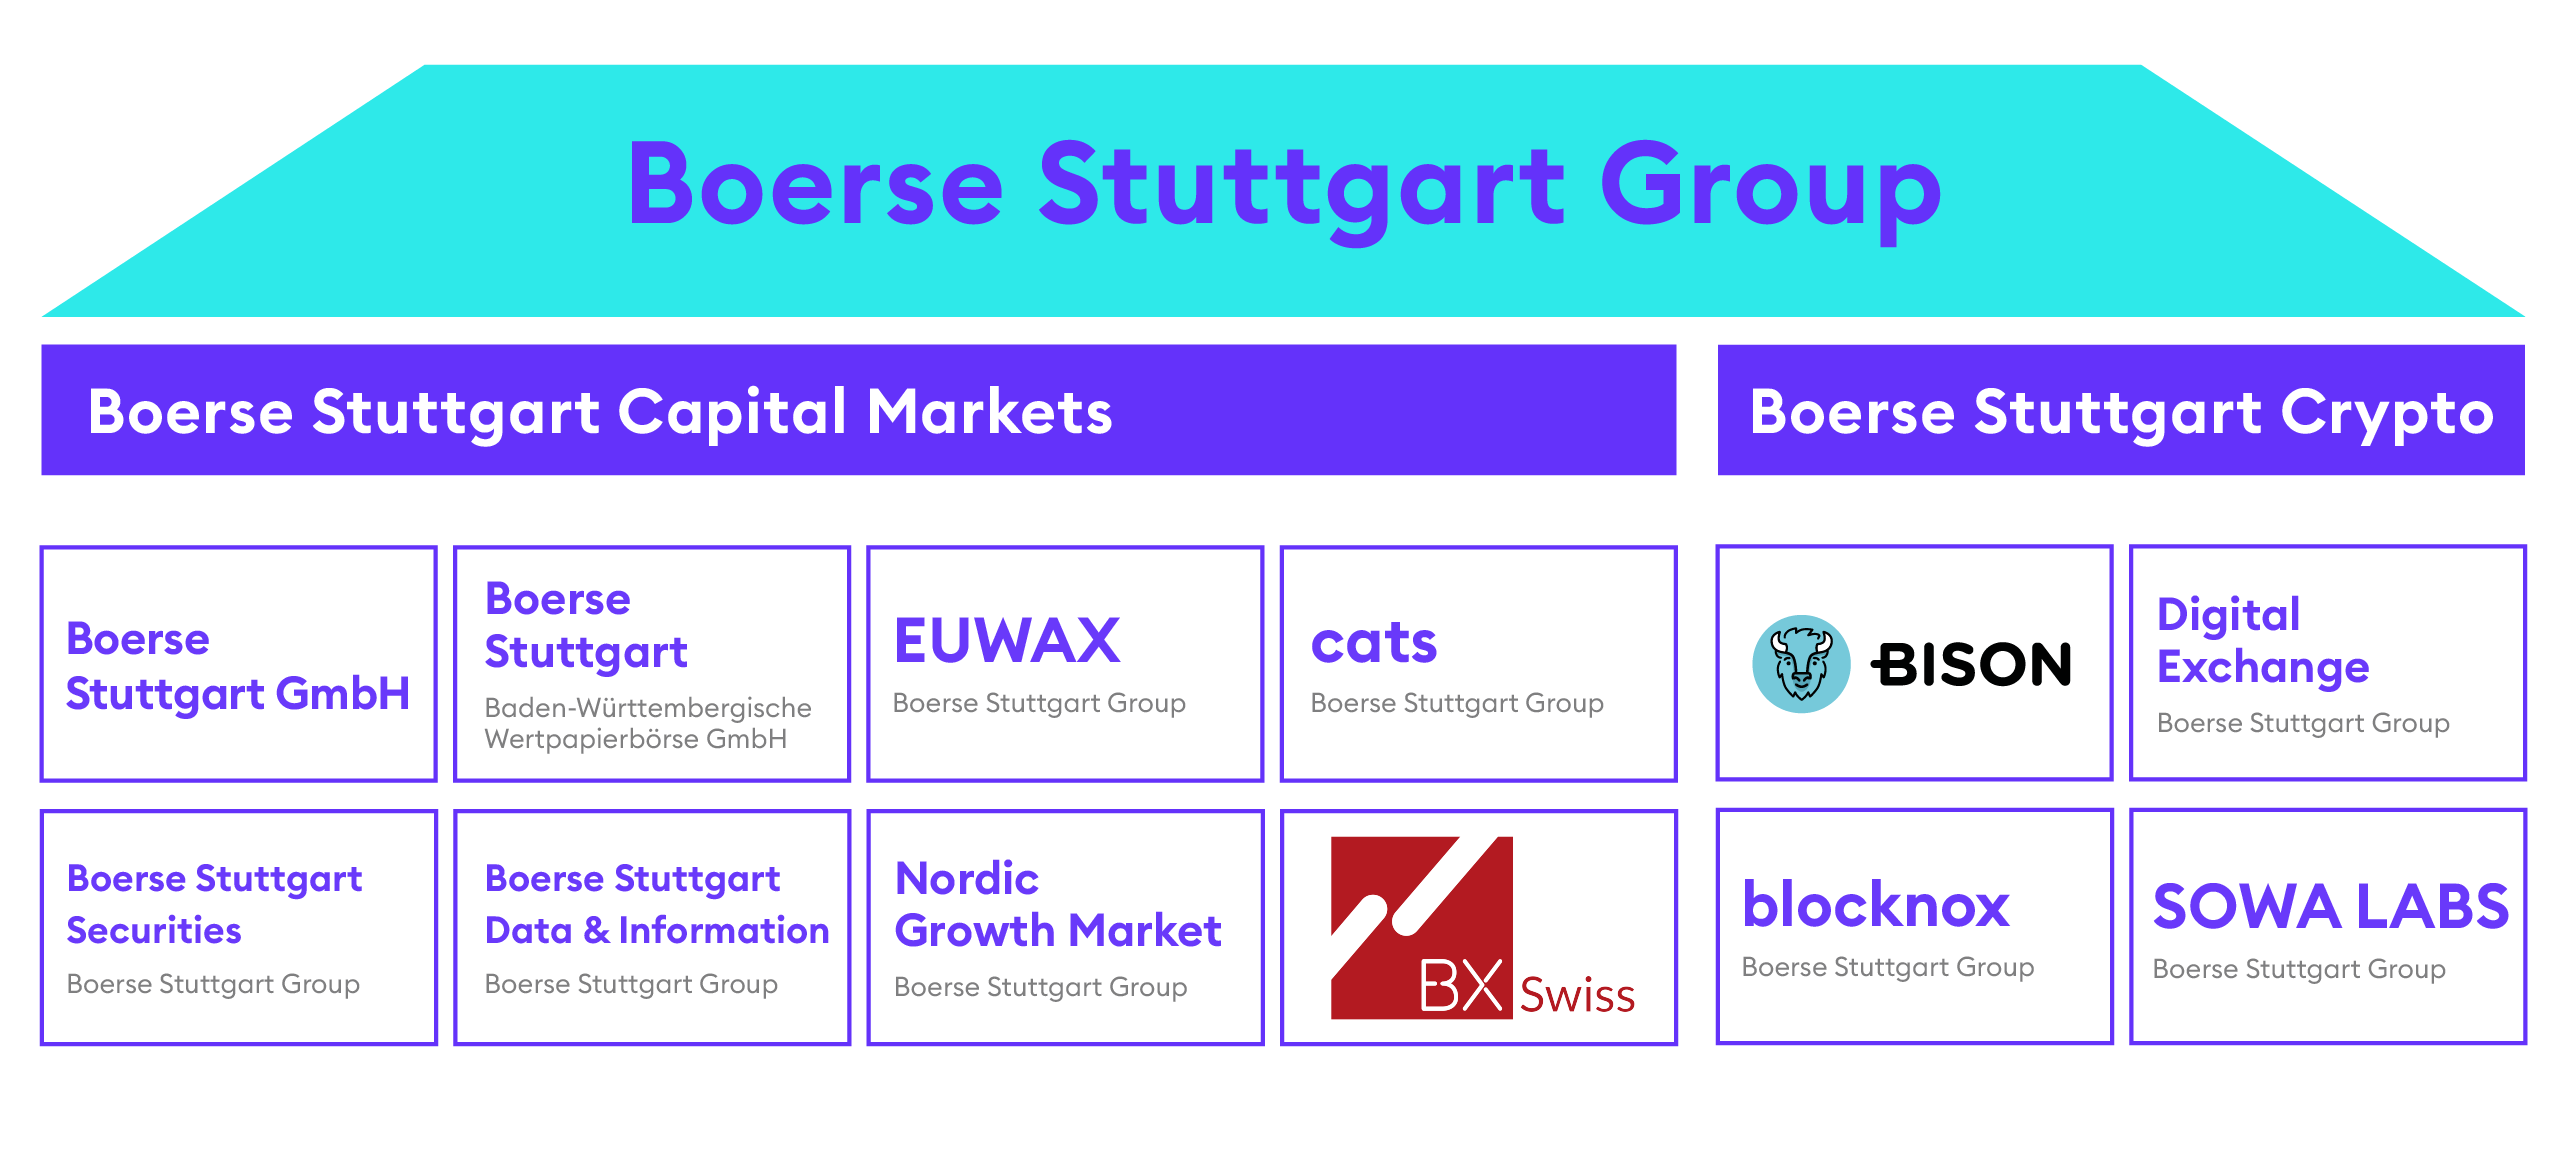 Structure of Boerse Stuttgart Group